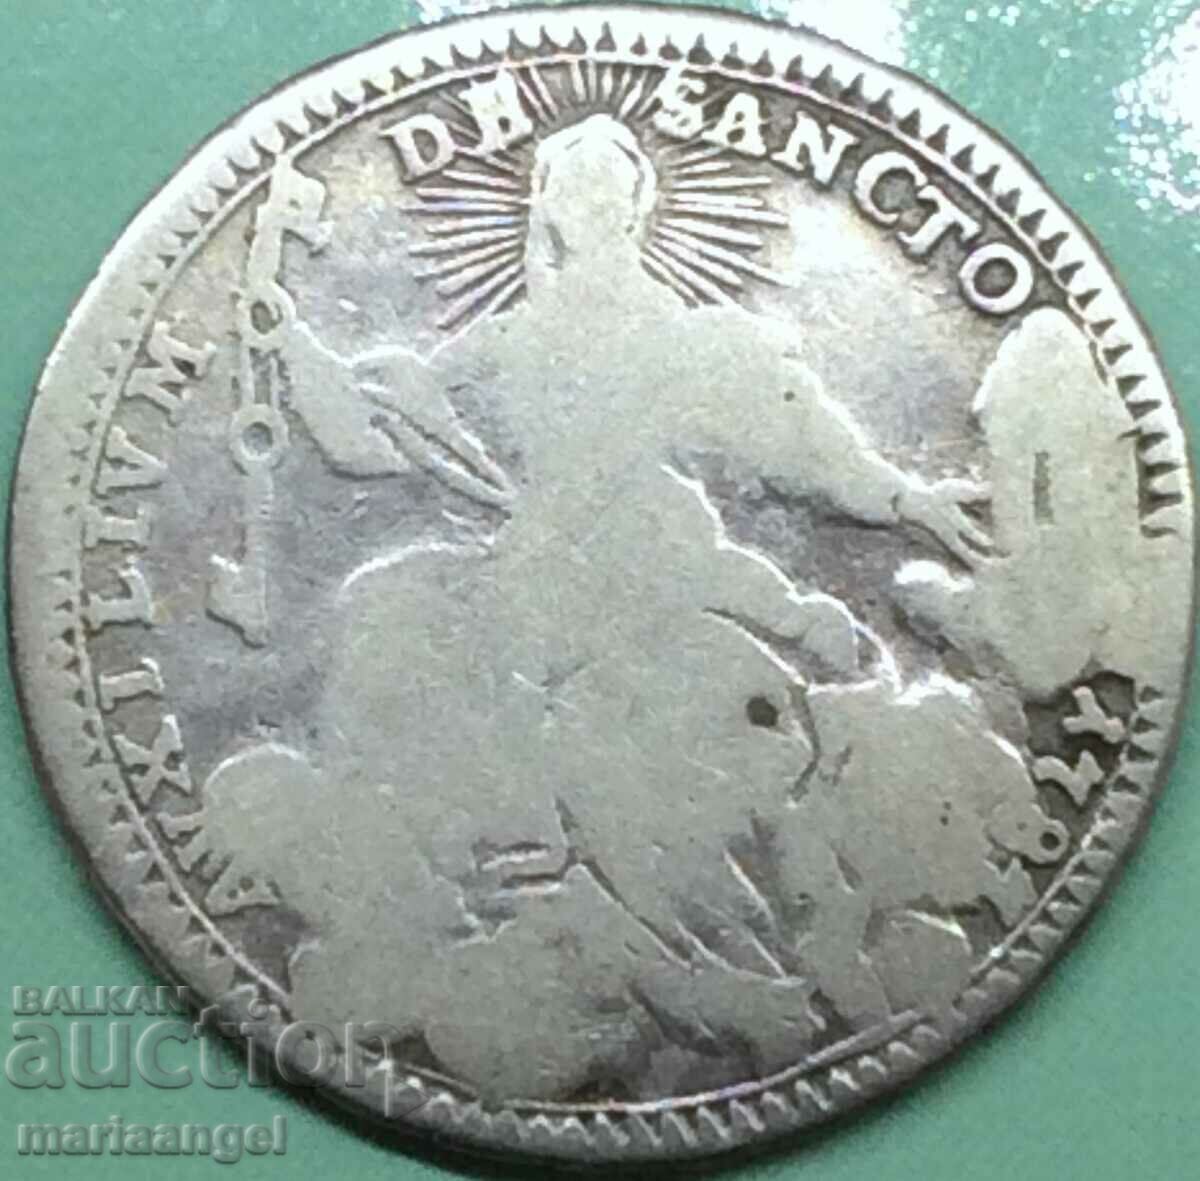 Ватикан джулио 1787 Пий VI 27мм сребро